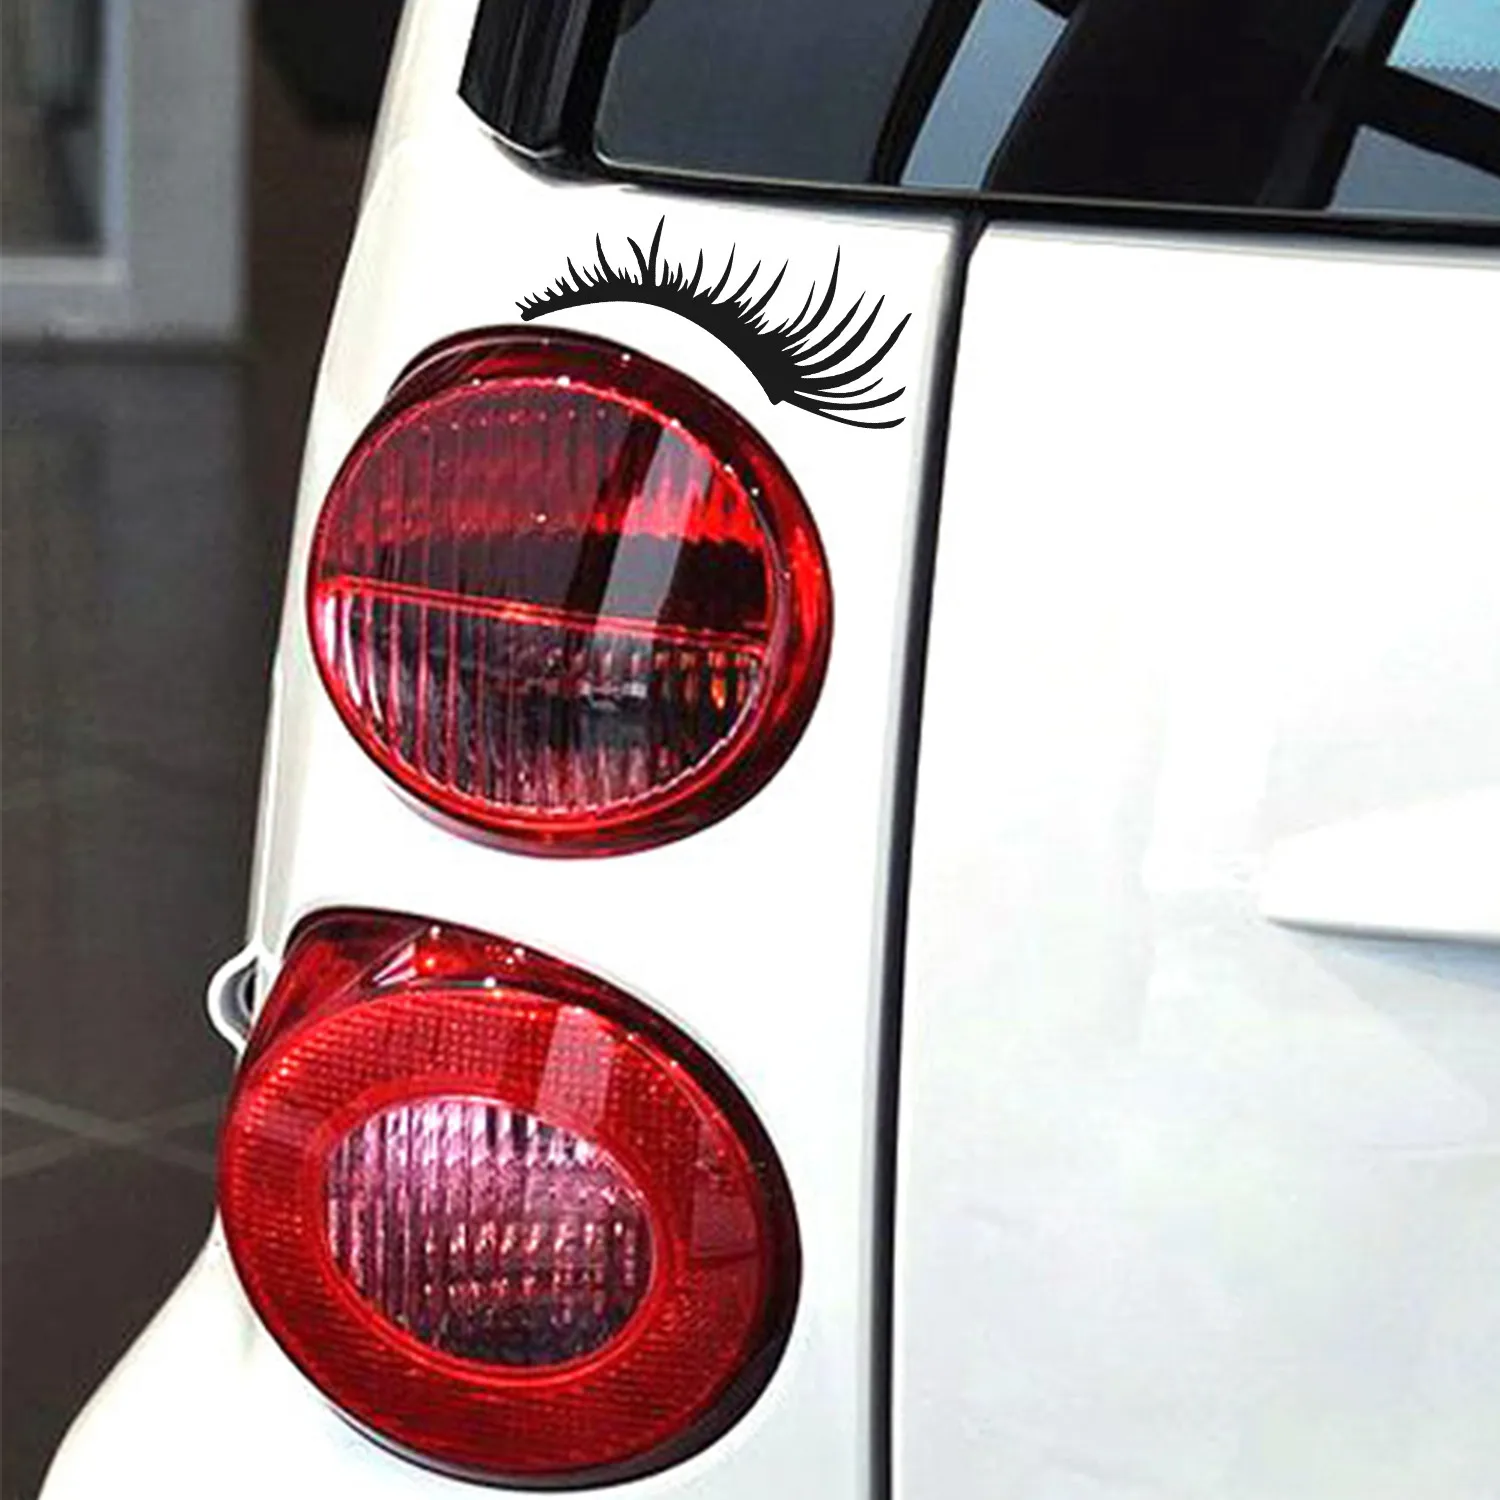 2pcs/set Auto Eyelash 3D Automotive eyelashes car eye lashes car